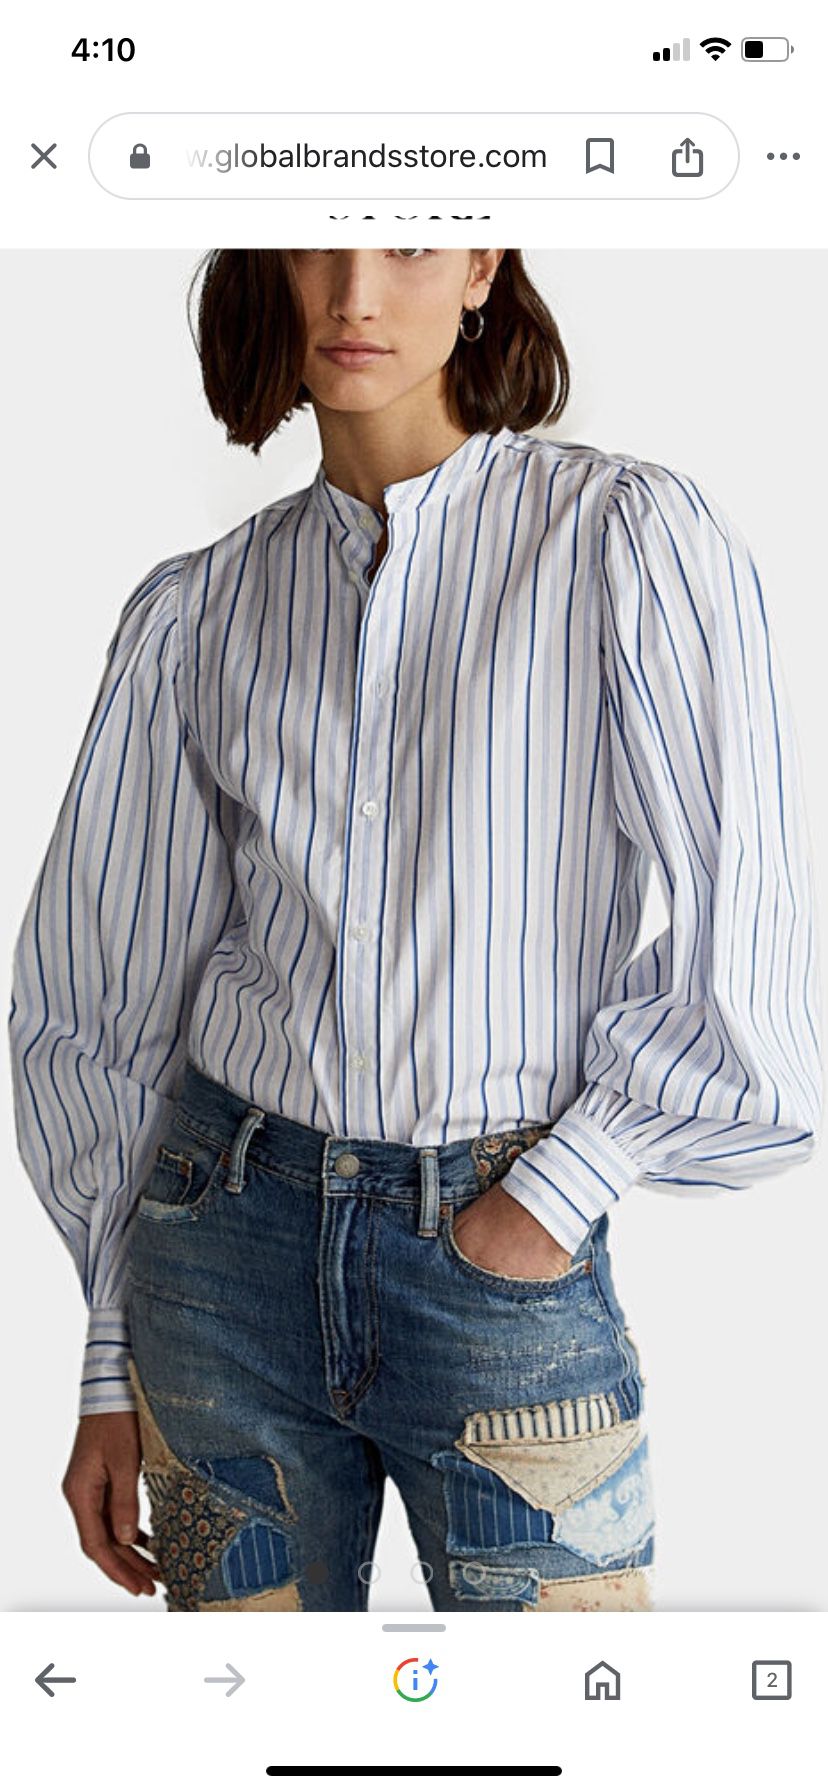 Women Polo Ralph Lauren Cotton striped shirt with Buffon sleeves size 2